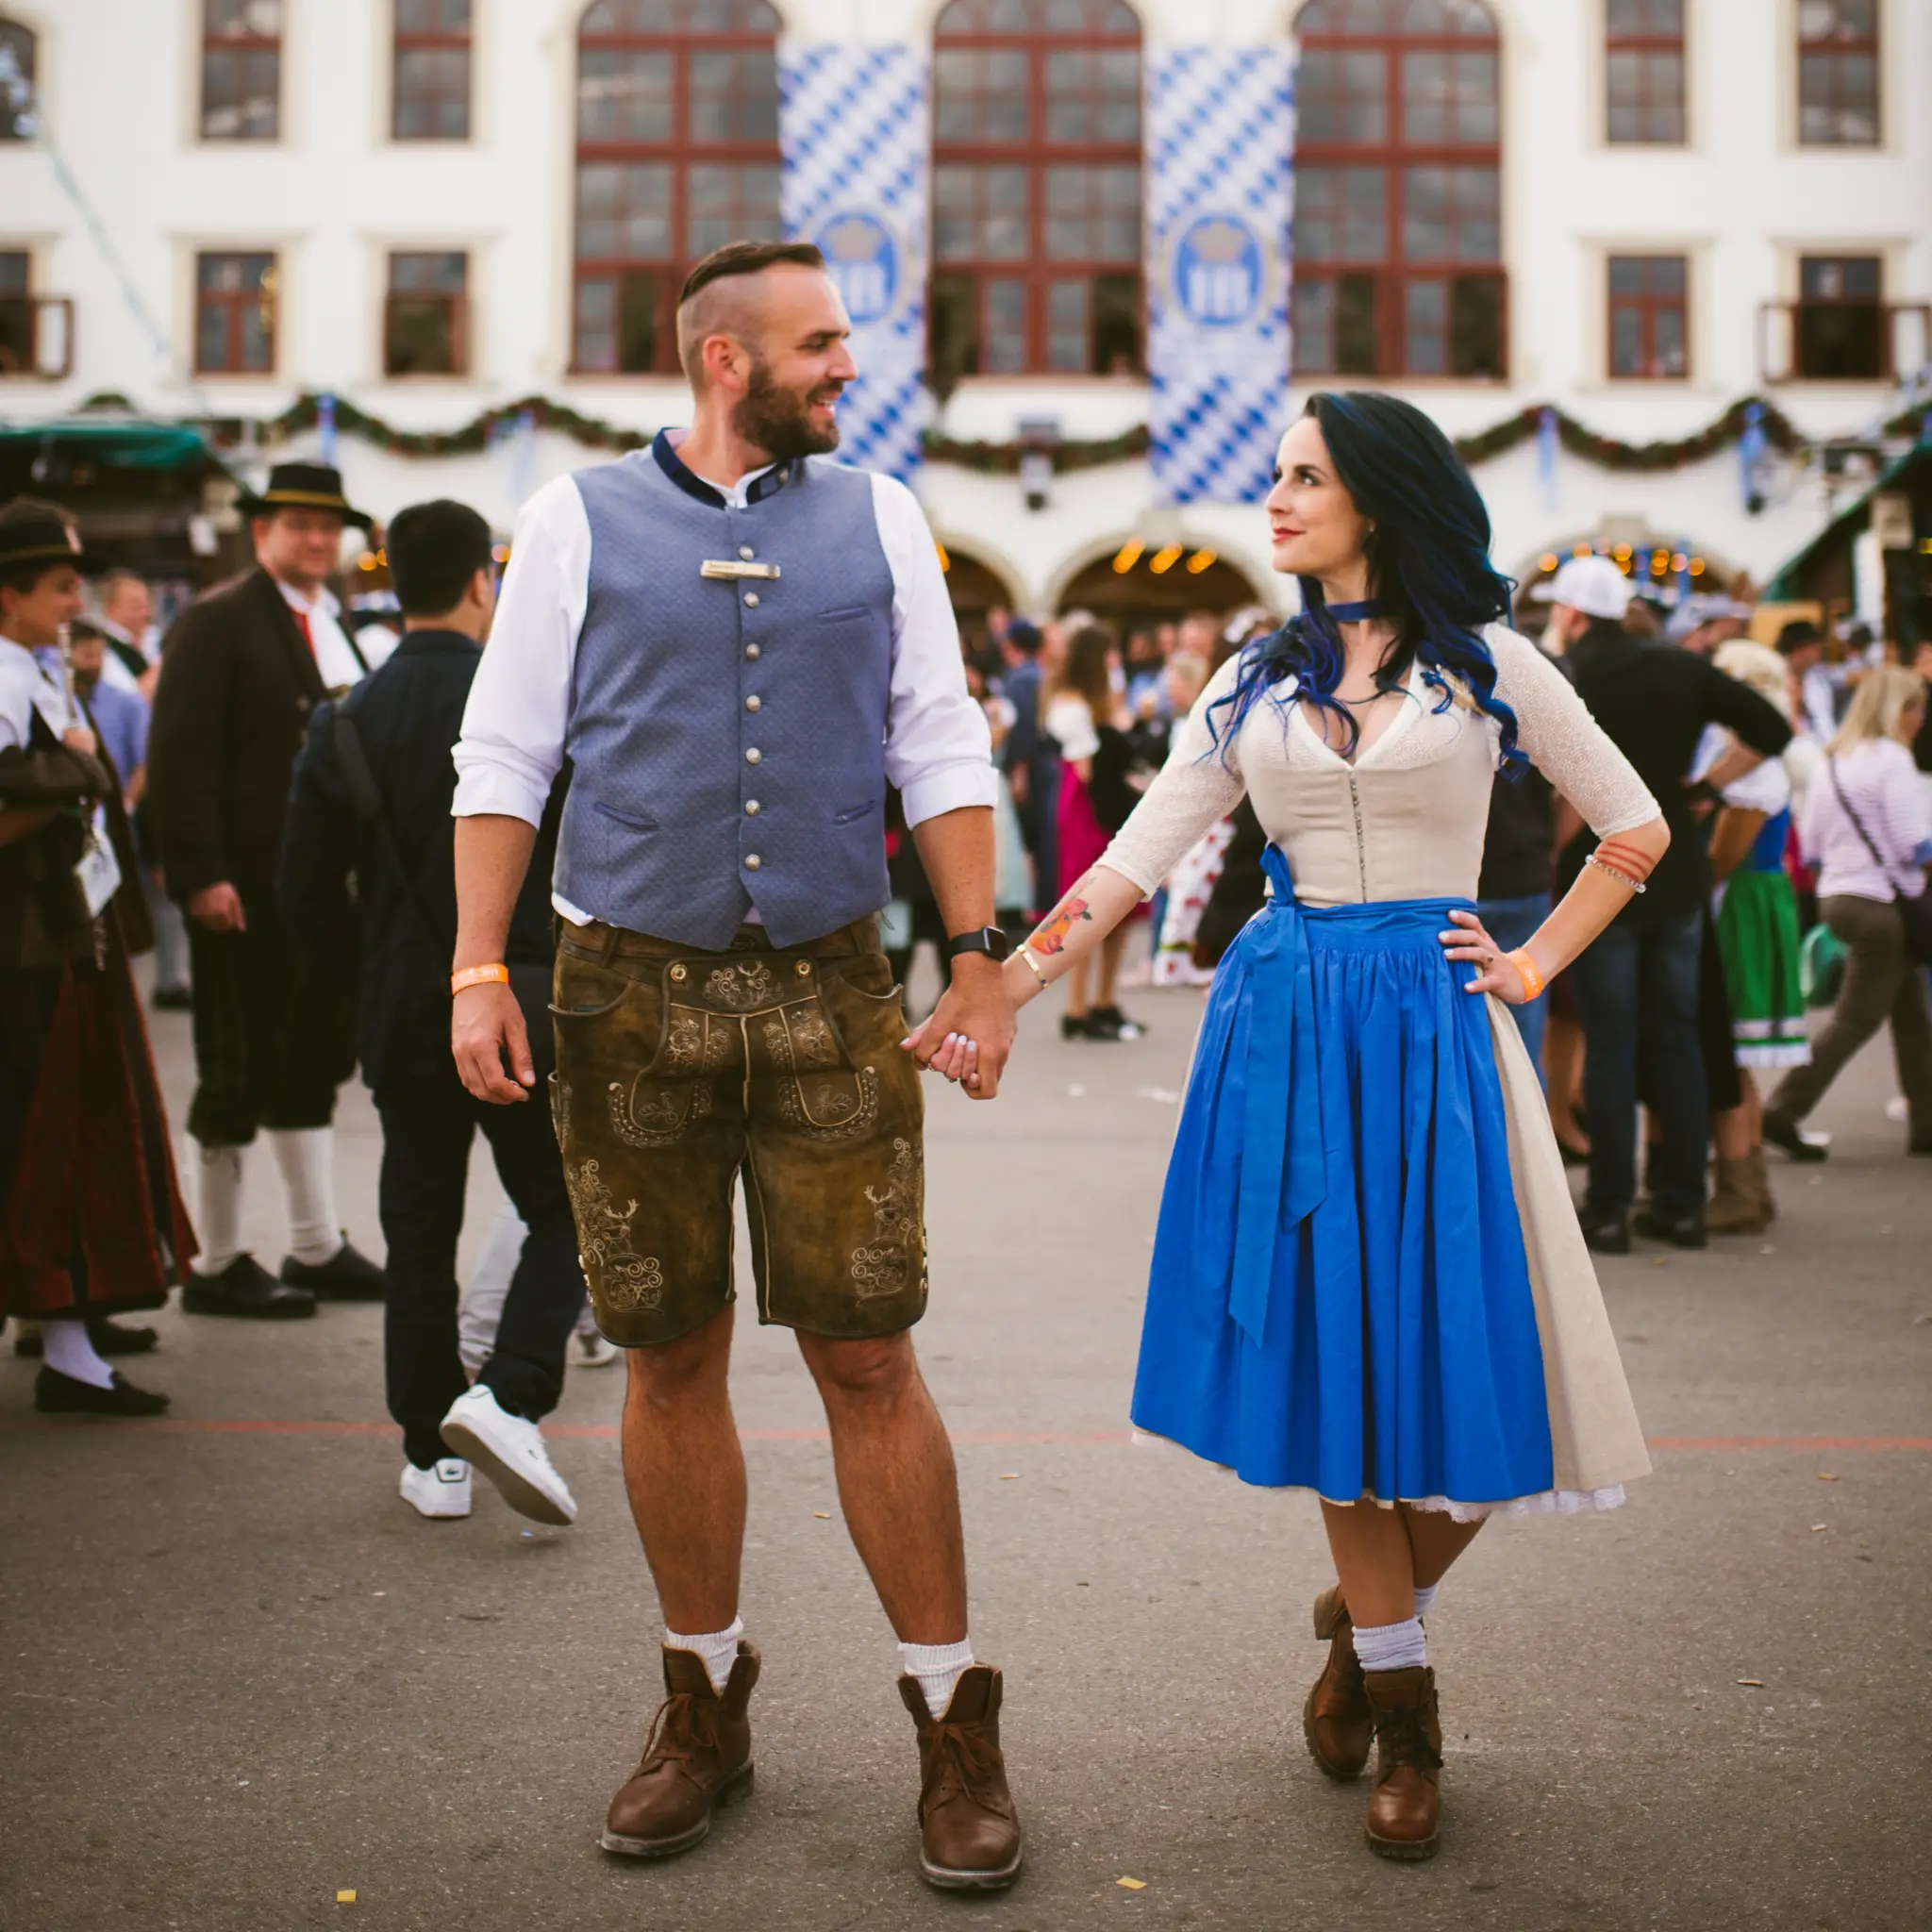 Oktoberfest photoshoot by Sophia, Localgrapher in Munich